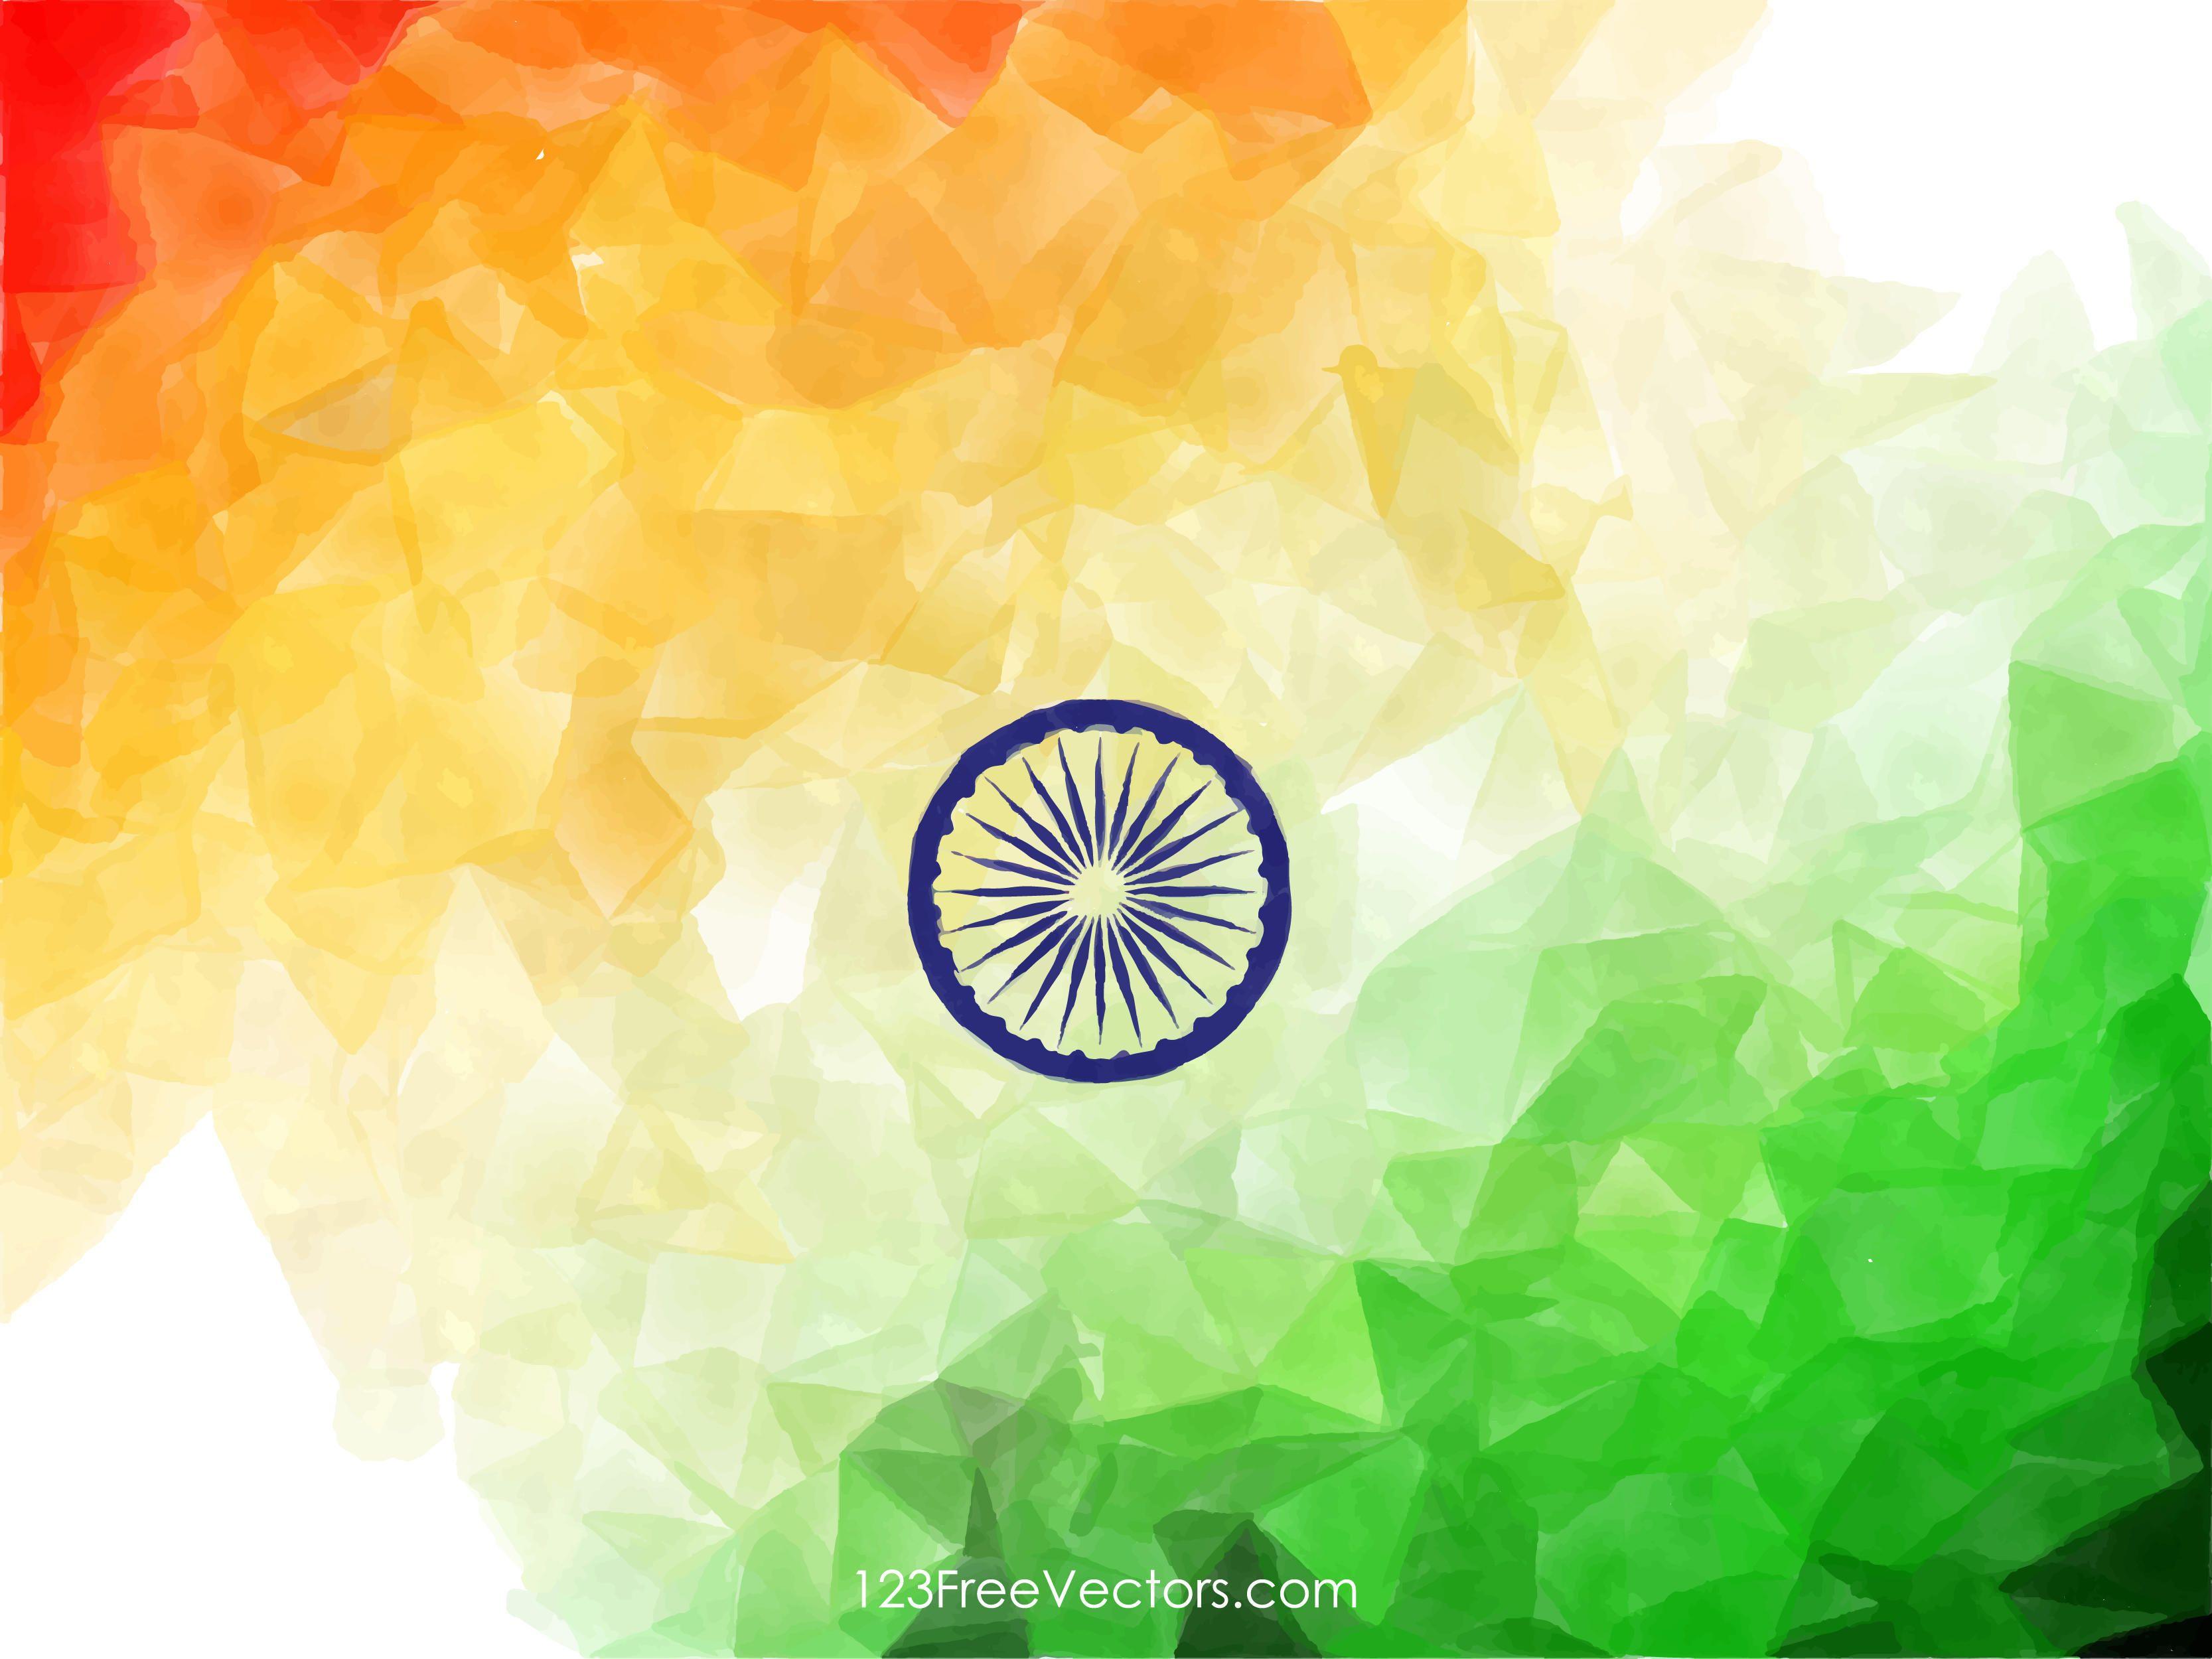 Watercolor Indian Flag WallpaperFreevectors